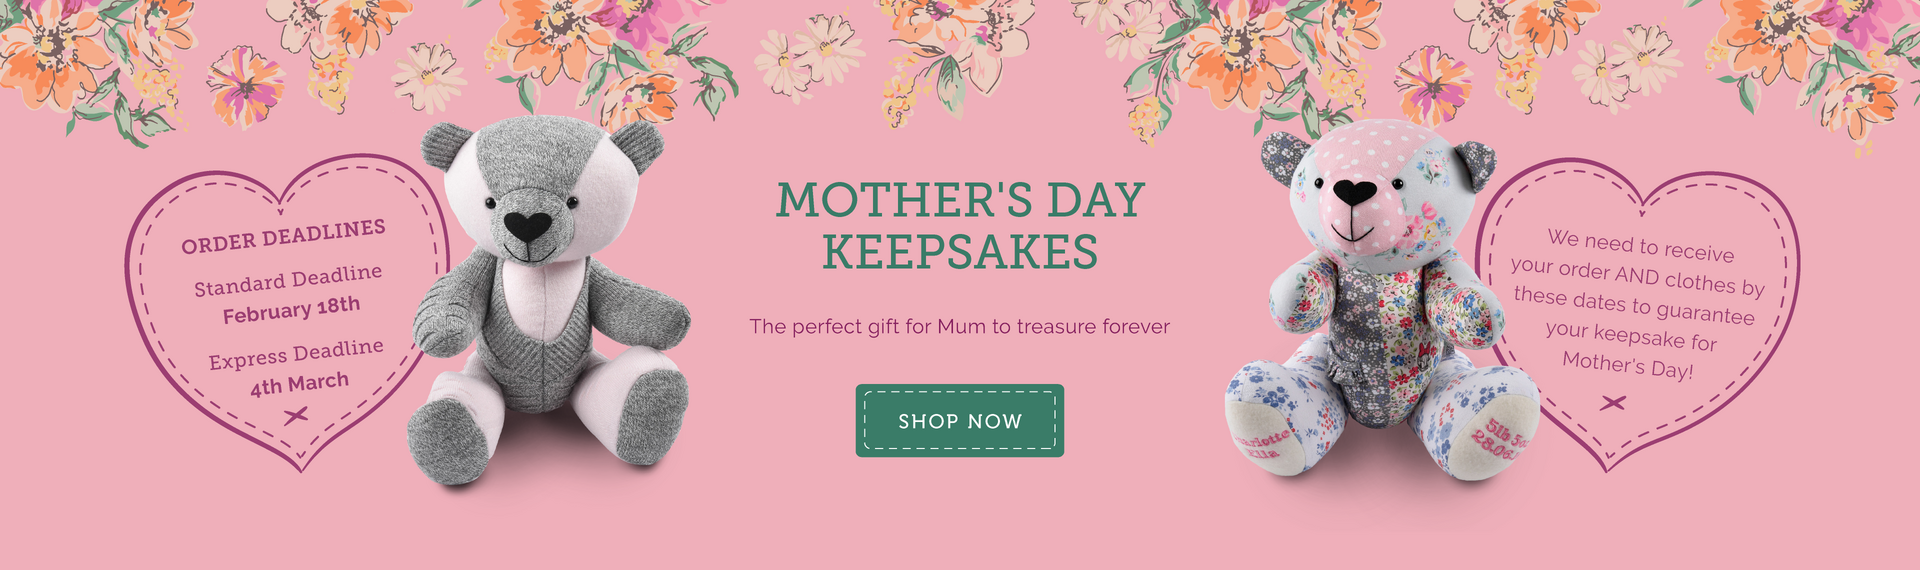 Mother's Day Deadlines